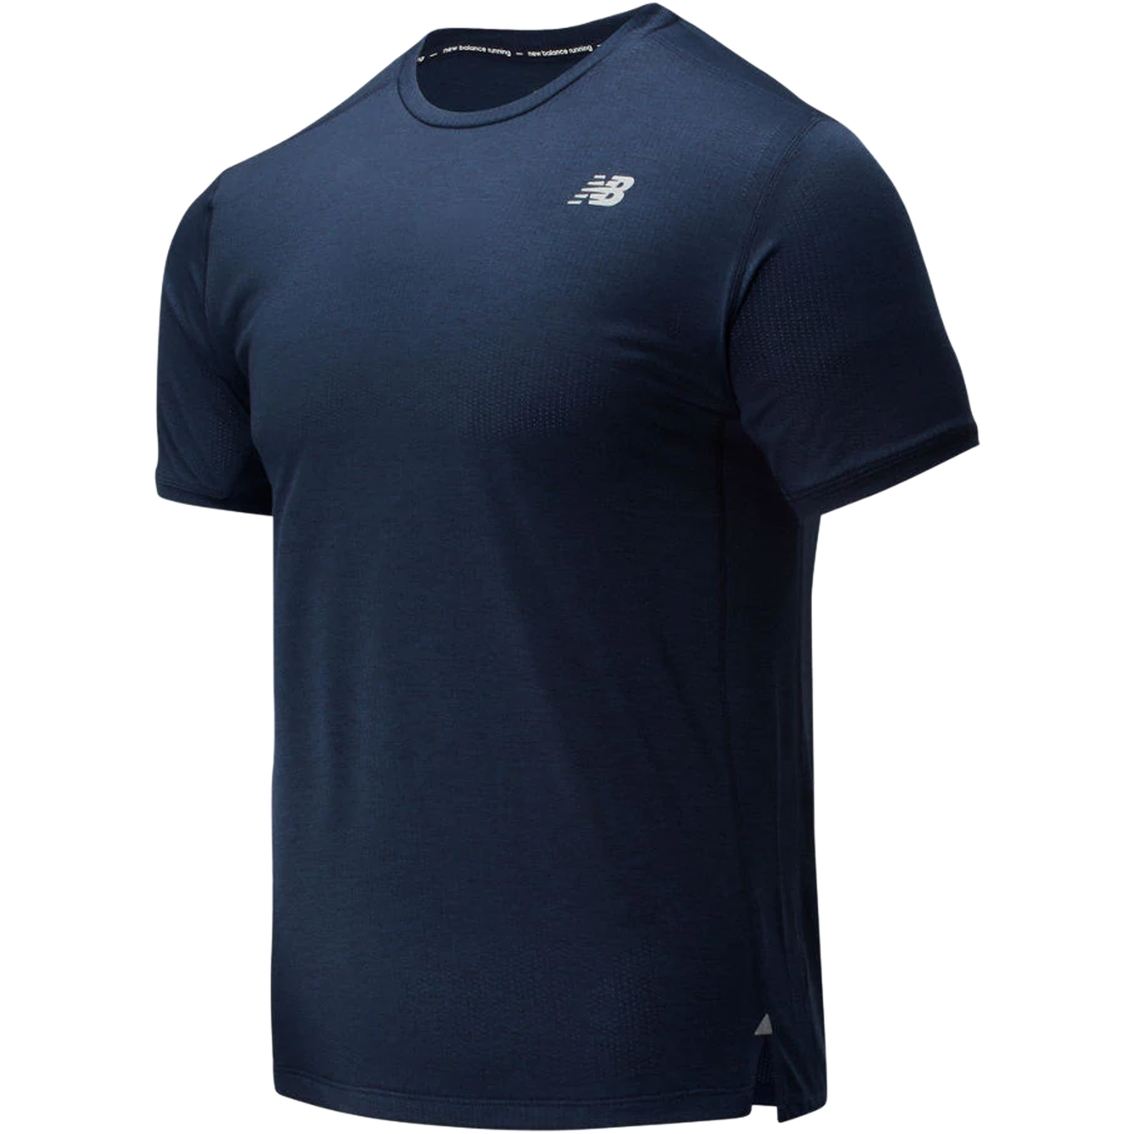 New Balance Impact Run Top Eclipse Blue | Shirts | Clothing ...